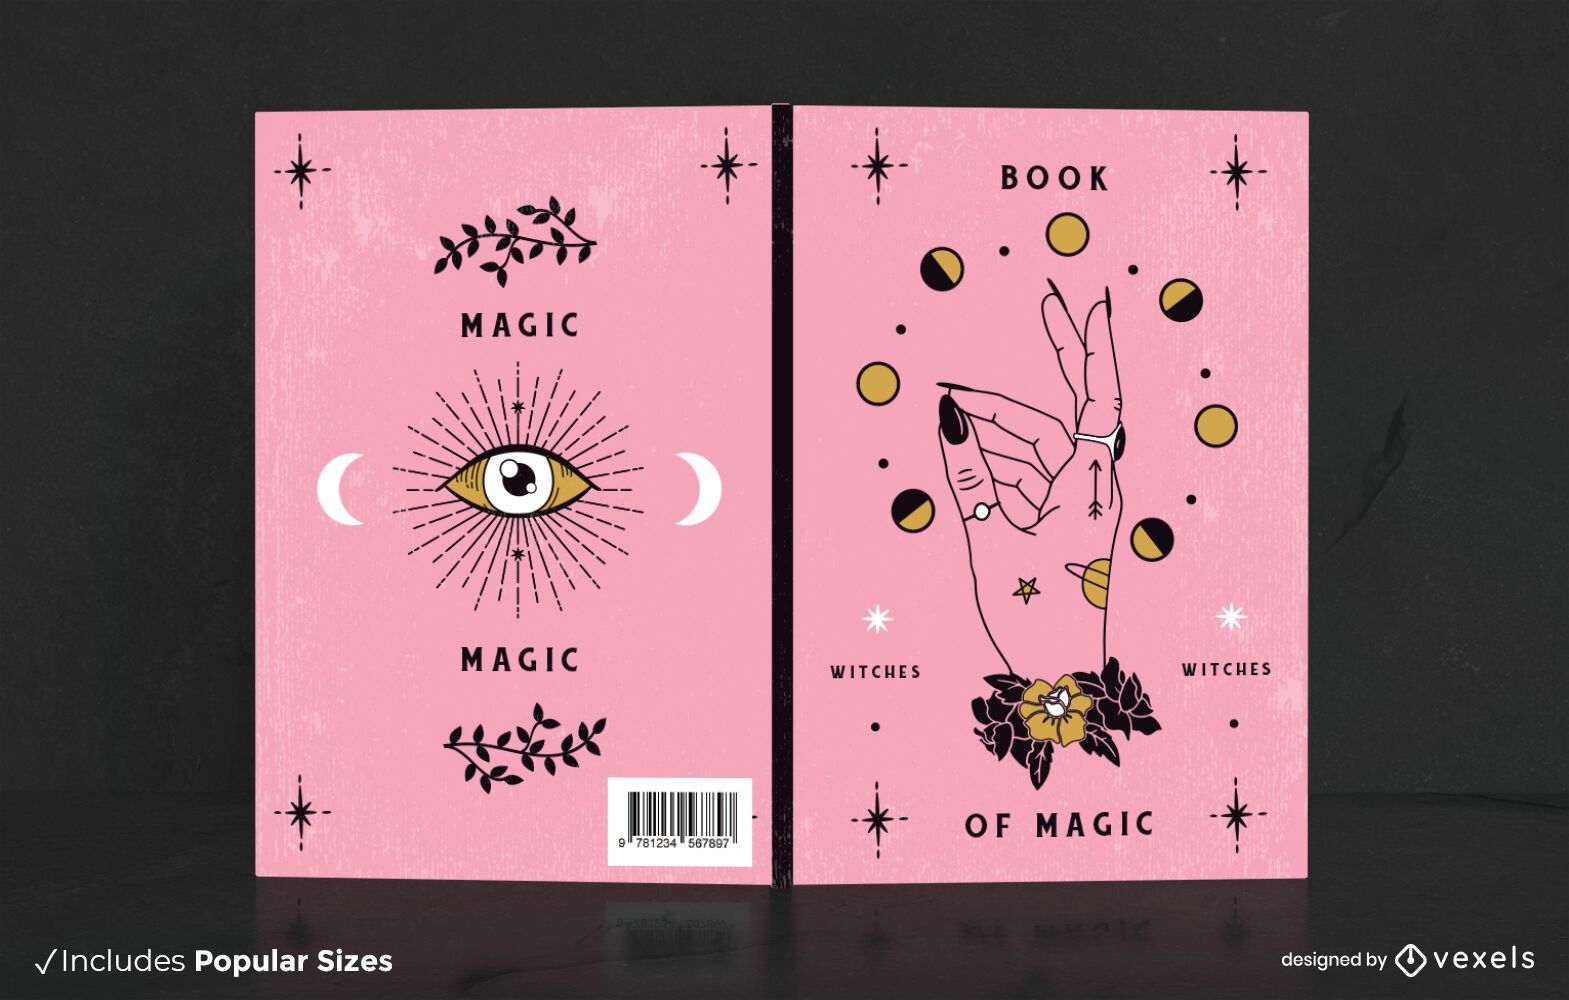 Magical book cover design